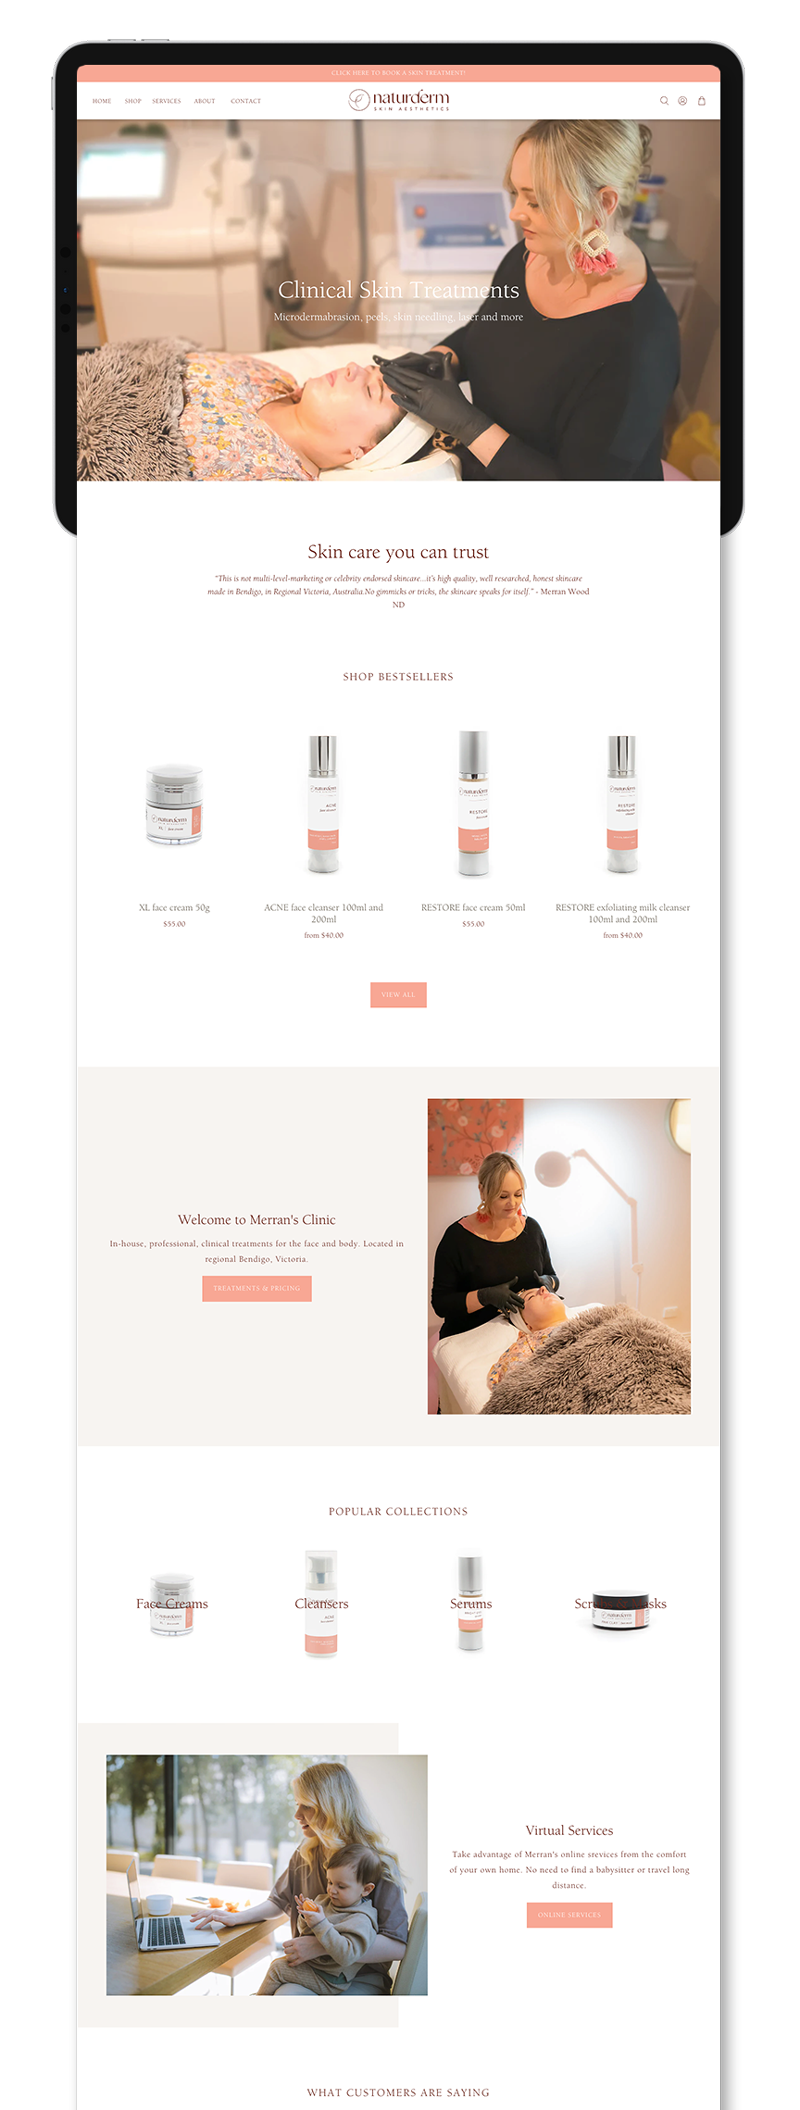 Media Avenue client Shopify website design for Naturderm Skin Aesthetics